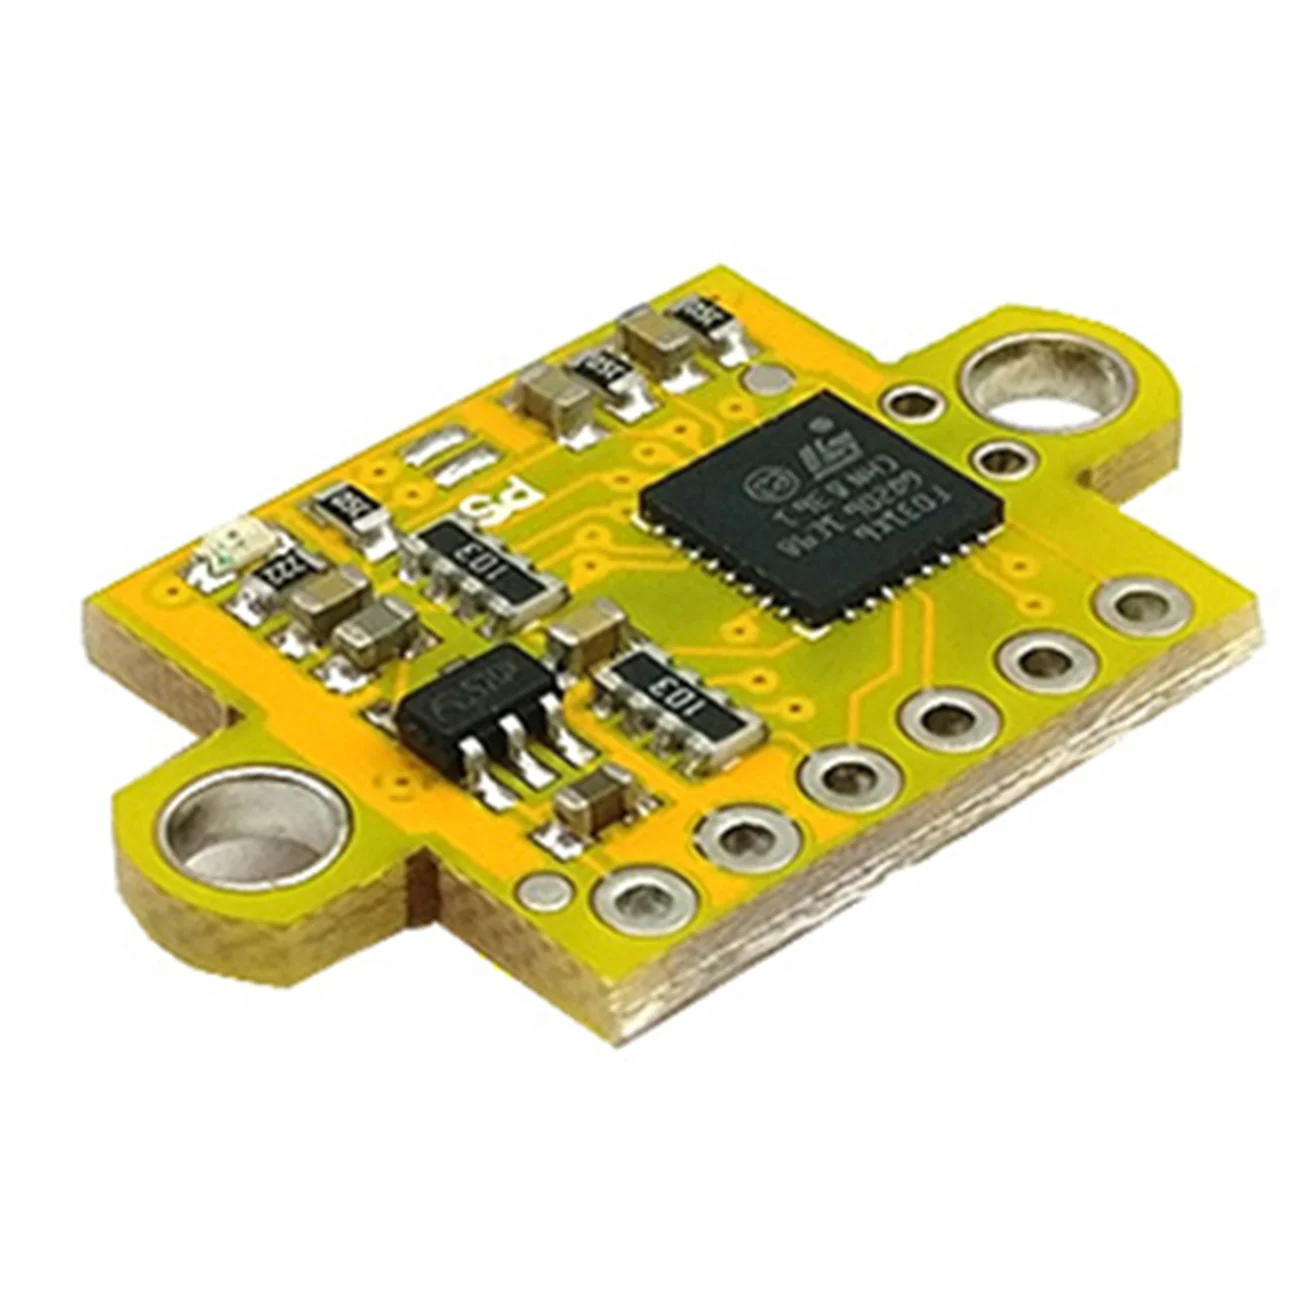 VL53L1X Flight Time Laser Sensor Module between GY 56L Sensor Module I2C series output port switch GY-56L1